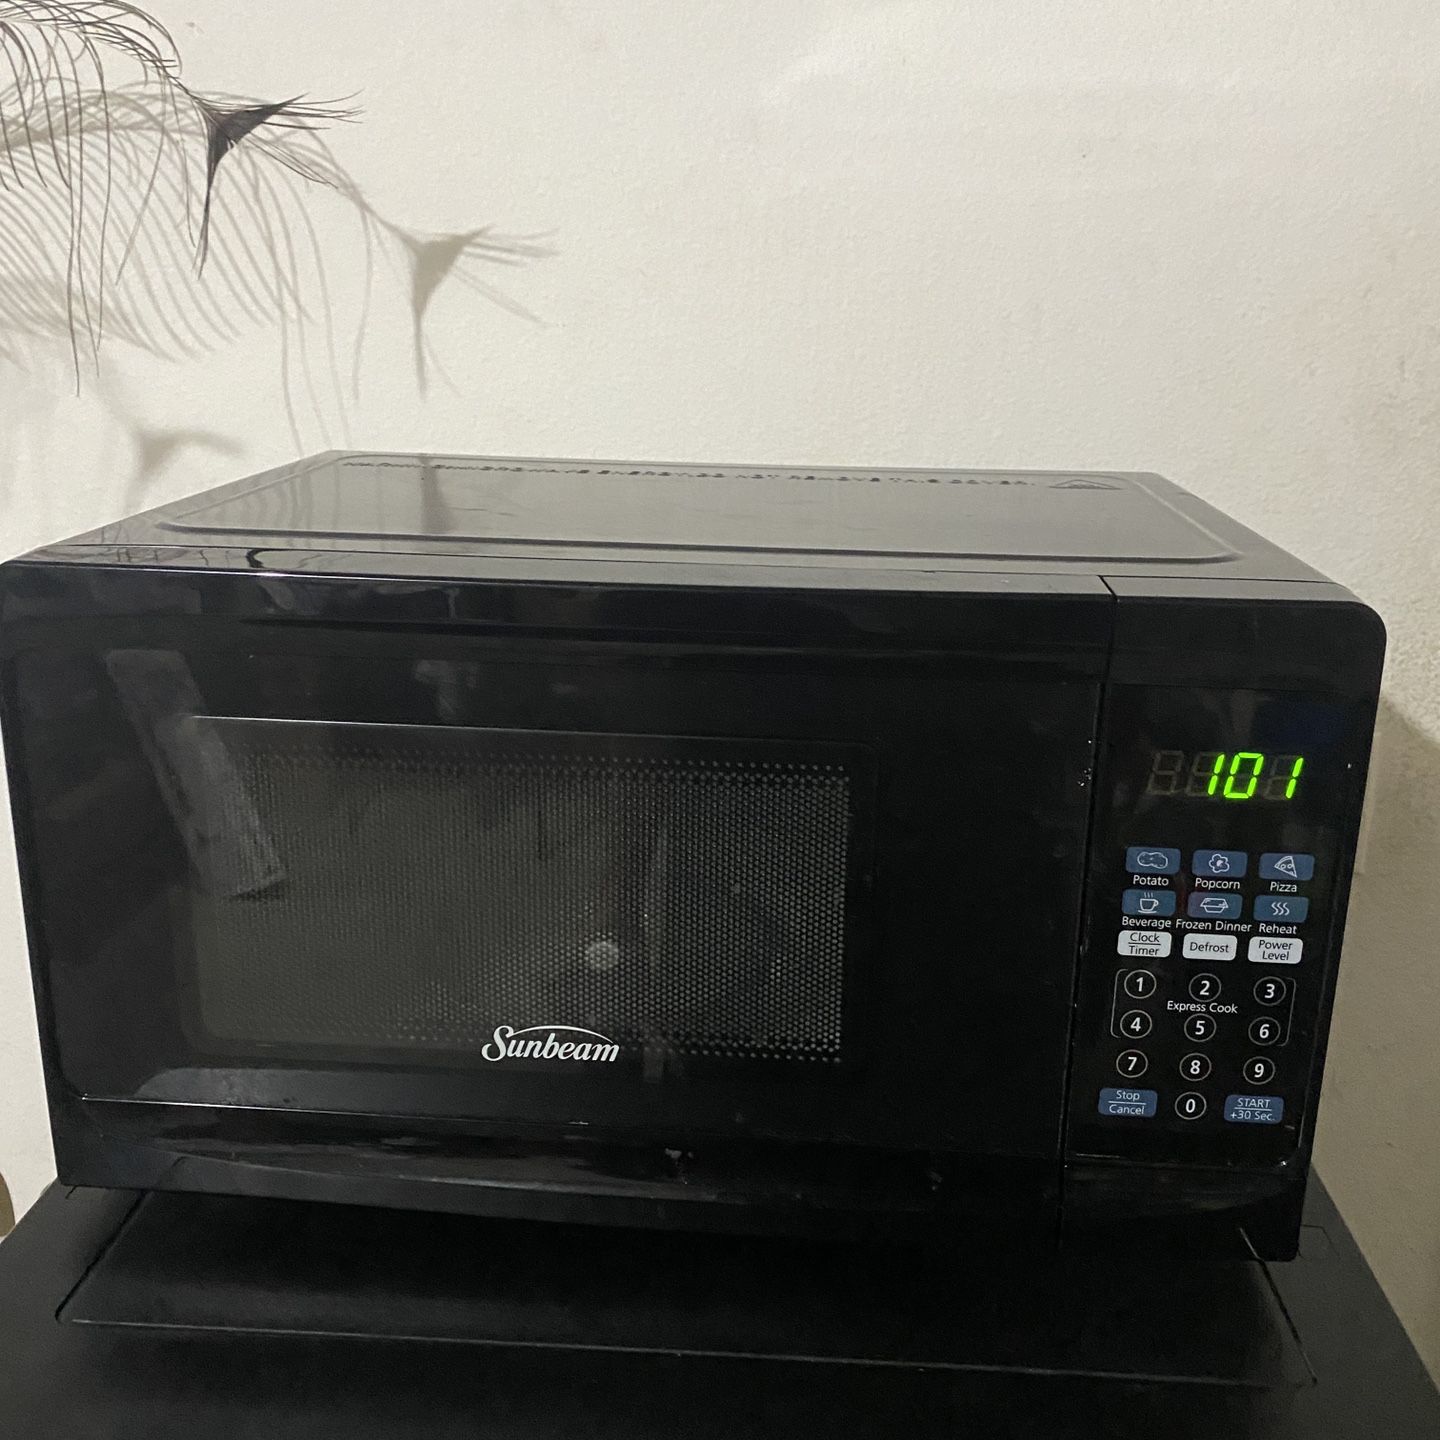 Sunbeam SGCMV807BK-07 Microwave Oven Review - Consumer Reports